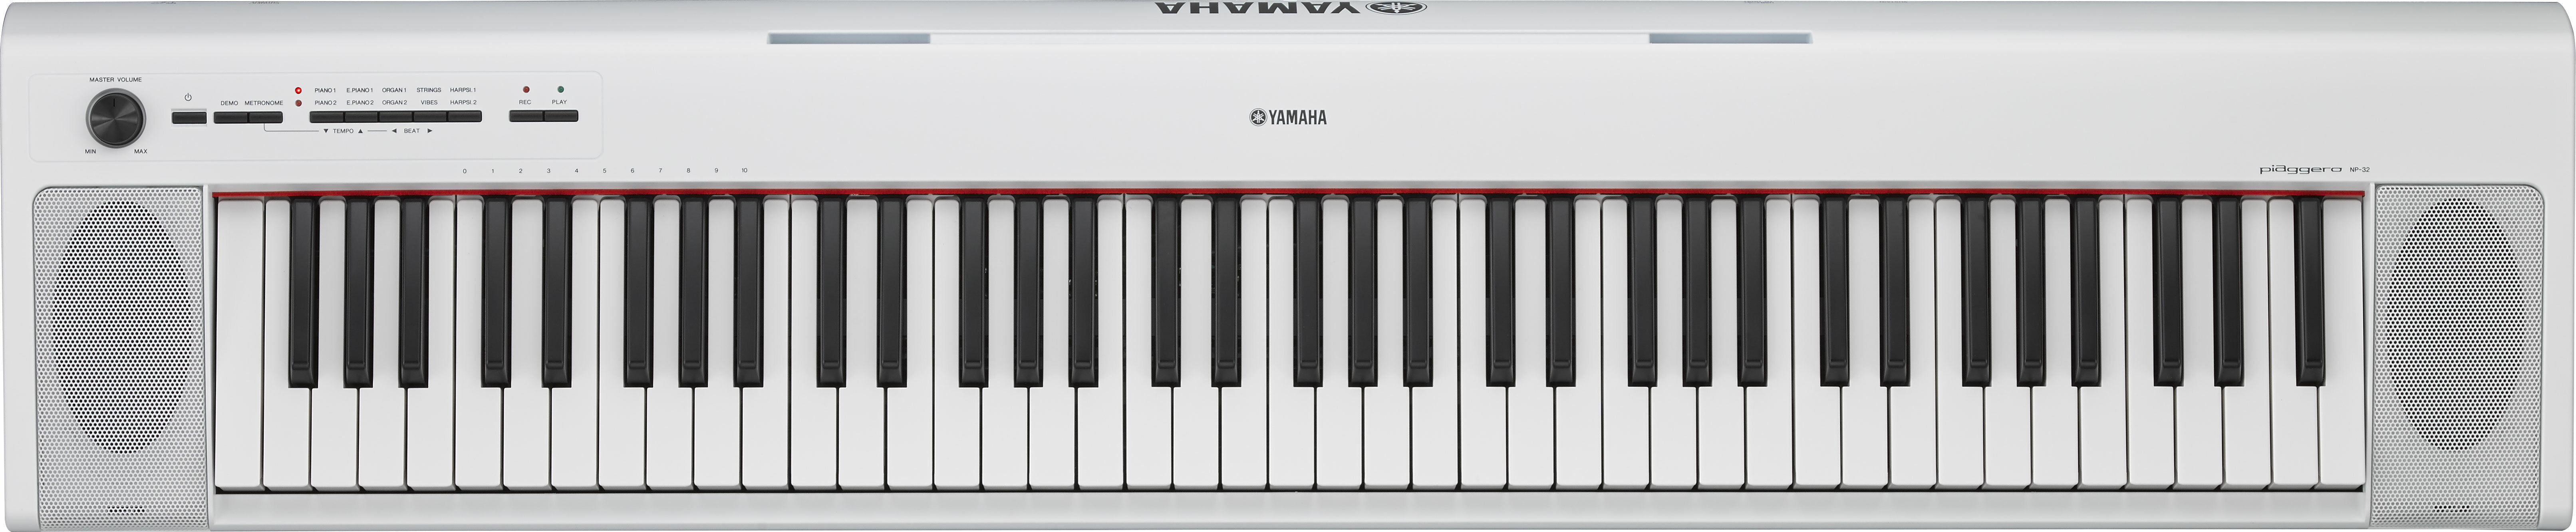 Yamaha Np-32 - White - Digital Klavier - Main picture